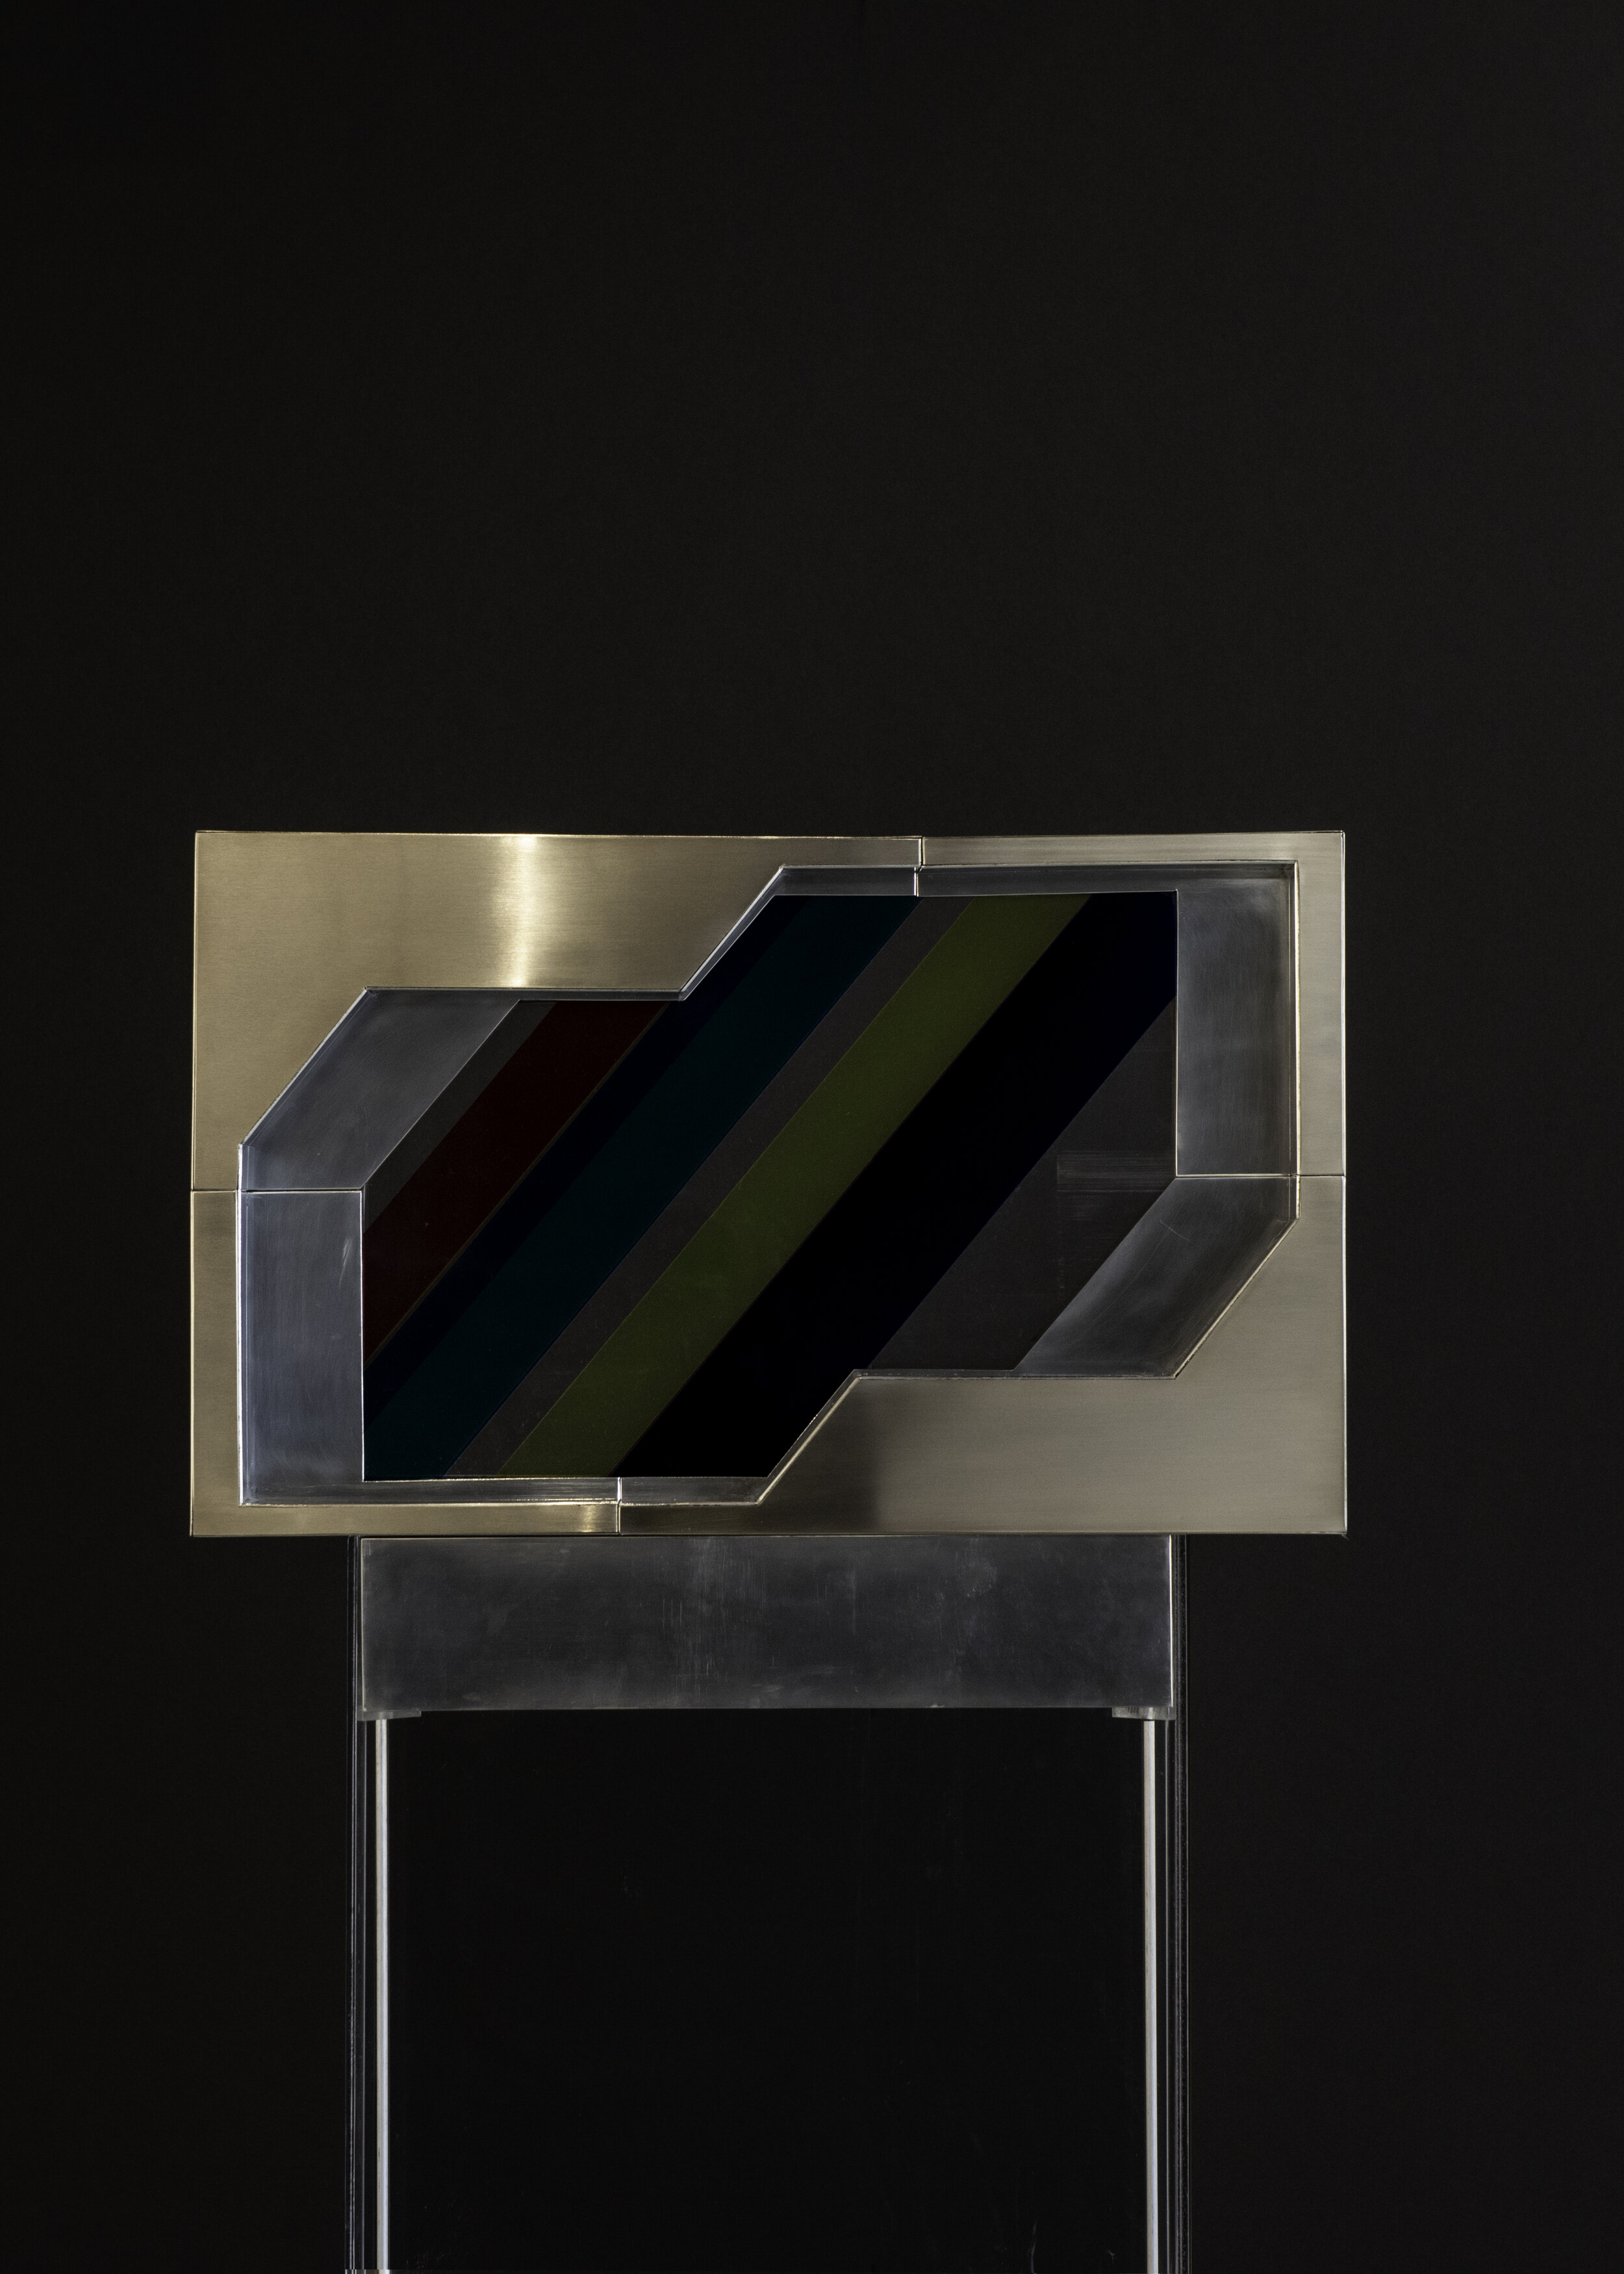 Synchronetic C-3095, 1969, Aluminum, stainless steel &amp; plexiglass, 57 x 27 x 10